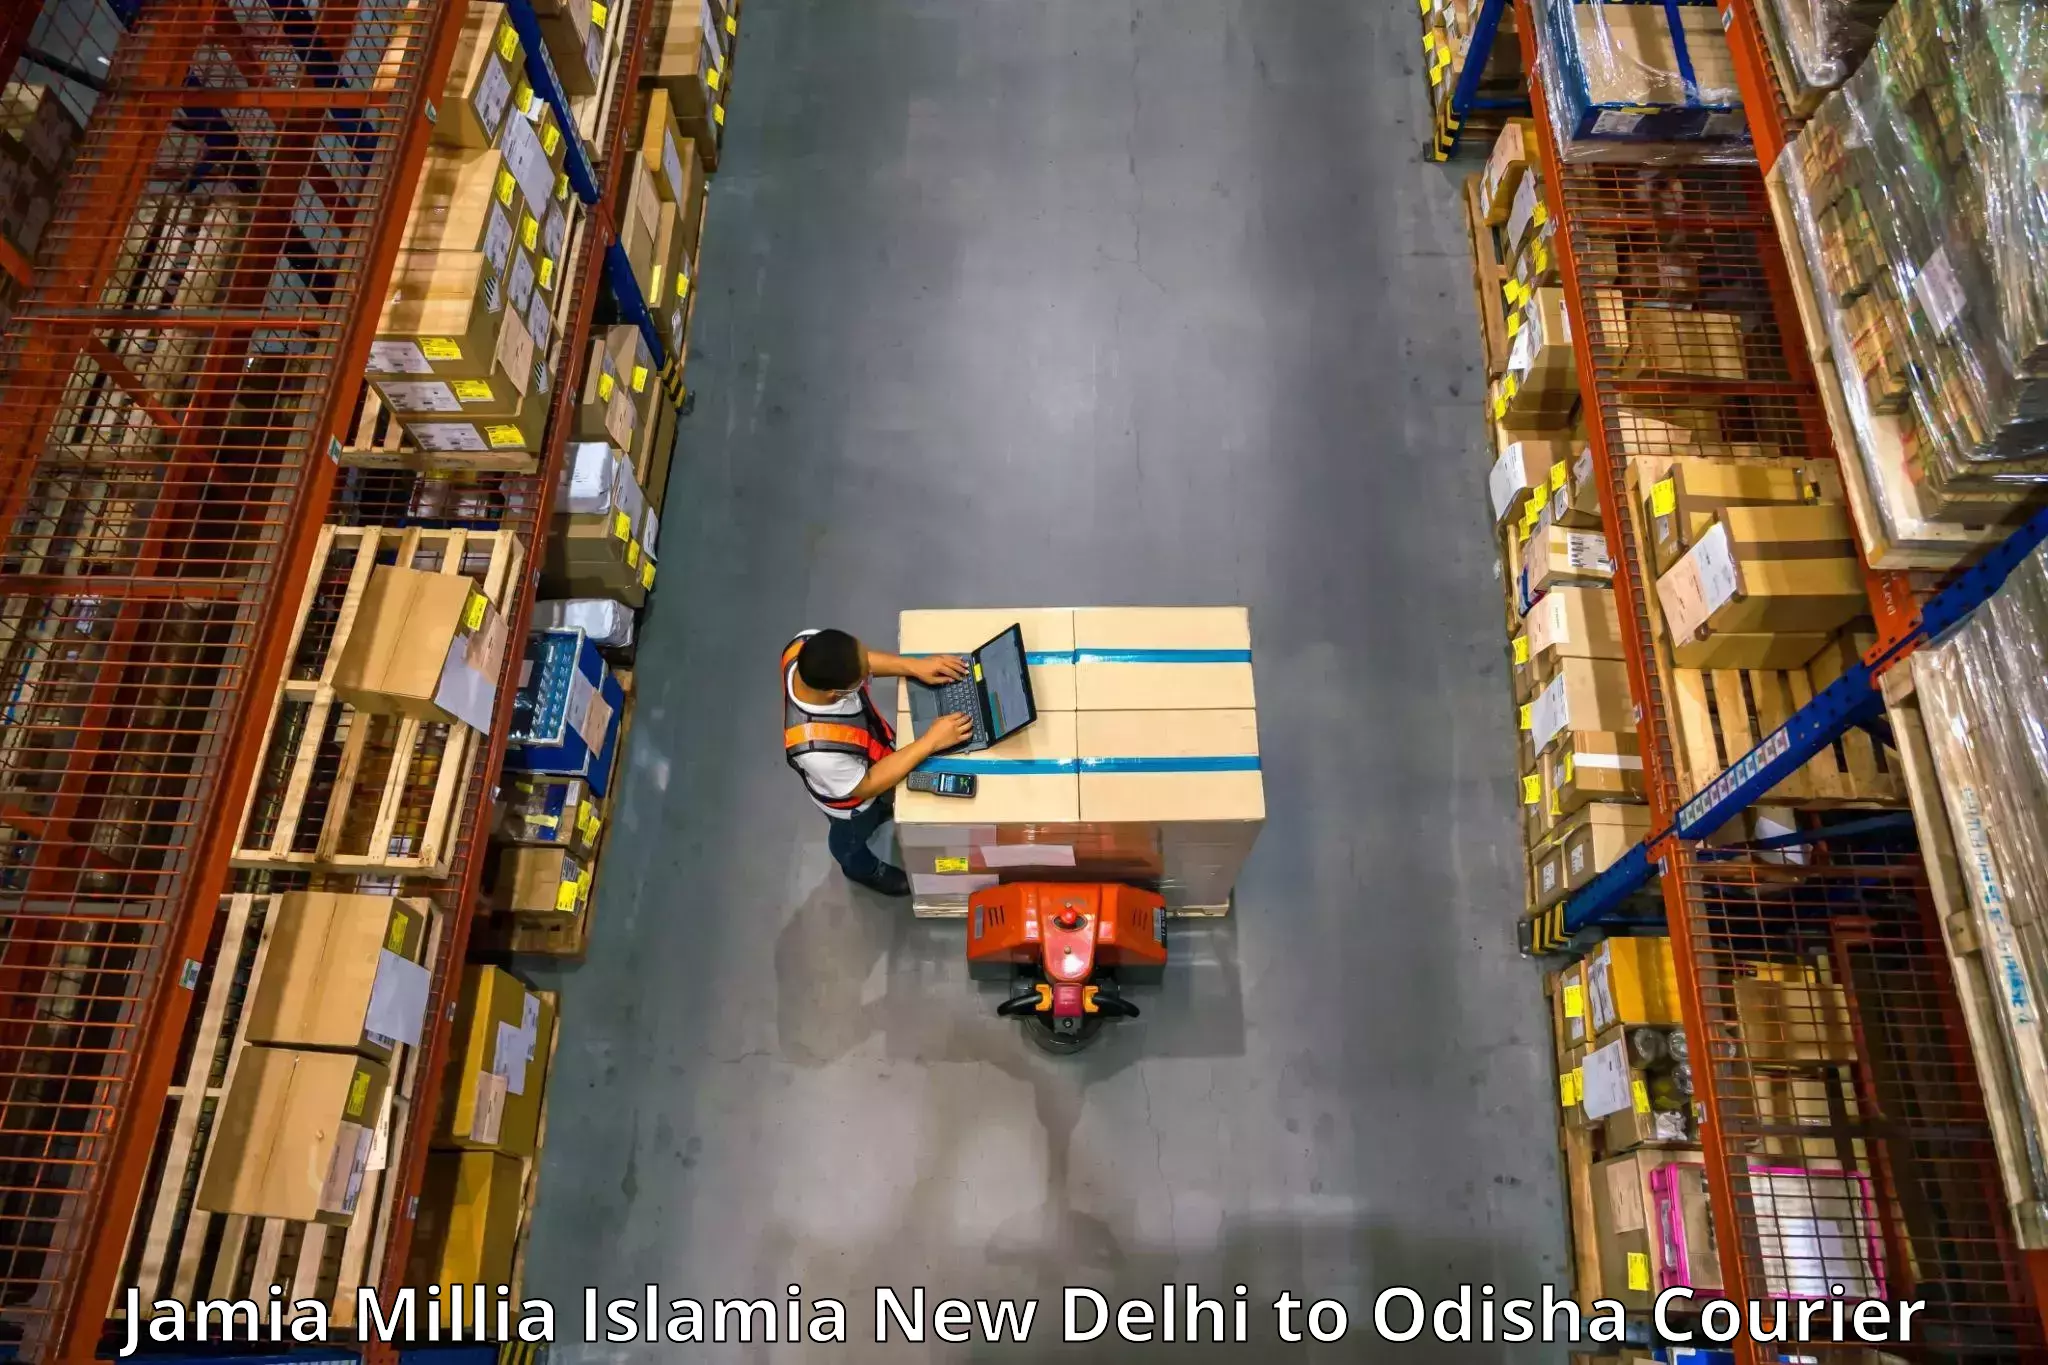 Professional moving company Jamia Millia Islamia New Delhi to Sankerko